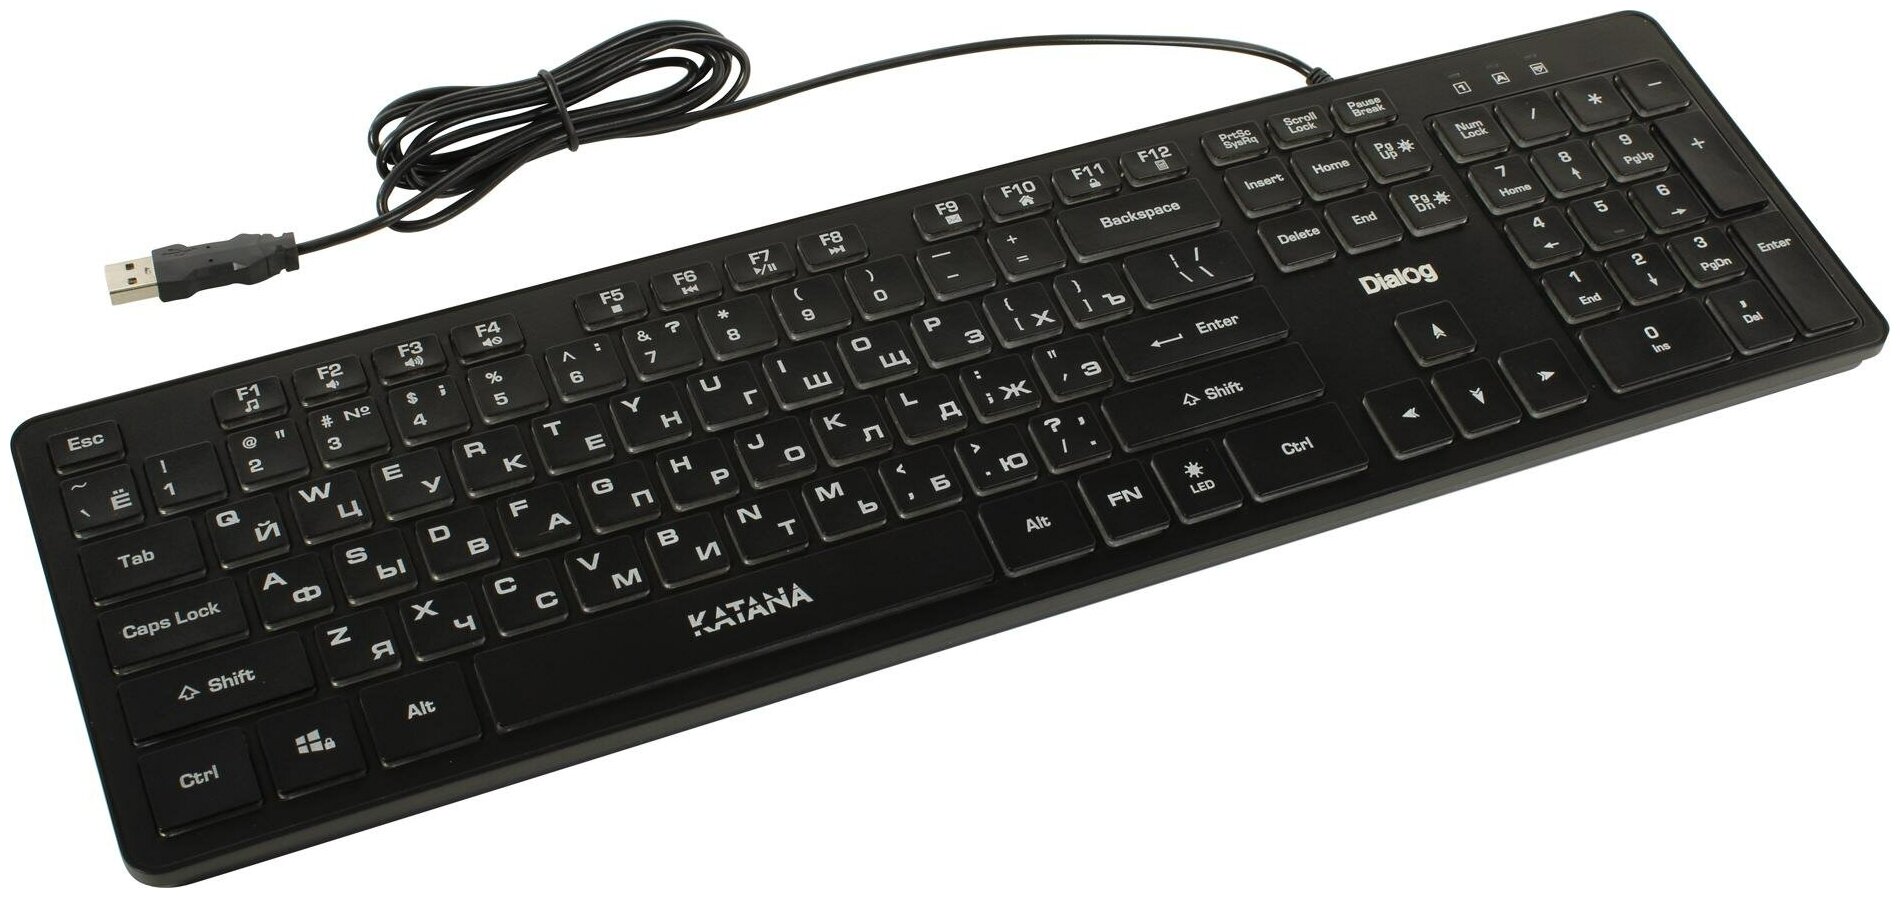 Dialog Katana Клавиатура Kk-ml17u Black - Multimedia, с янтарной подсветкой клавиш, Usb, черная .